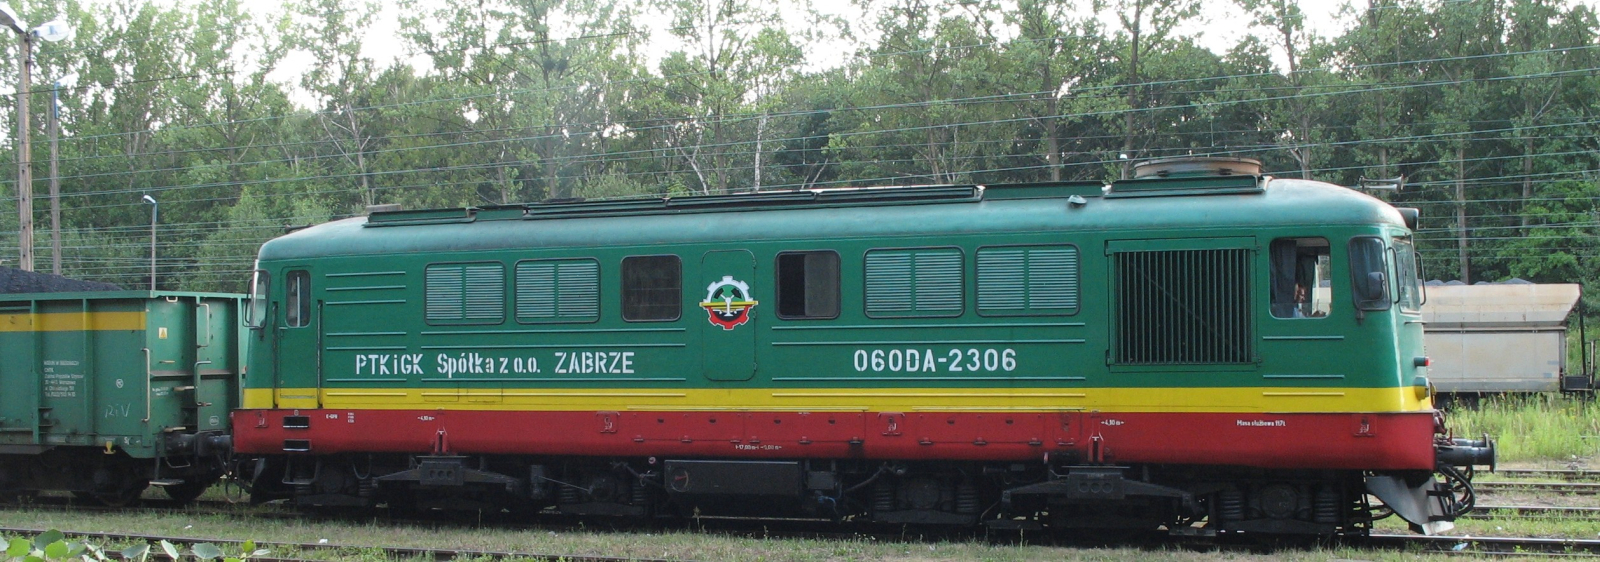 060DA-2306 of Polish operator PTKiGK Zabrze in July 2006